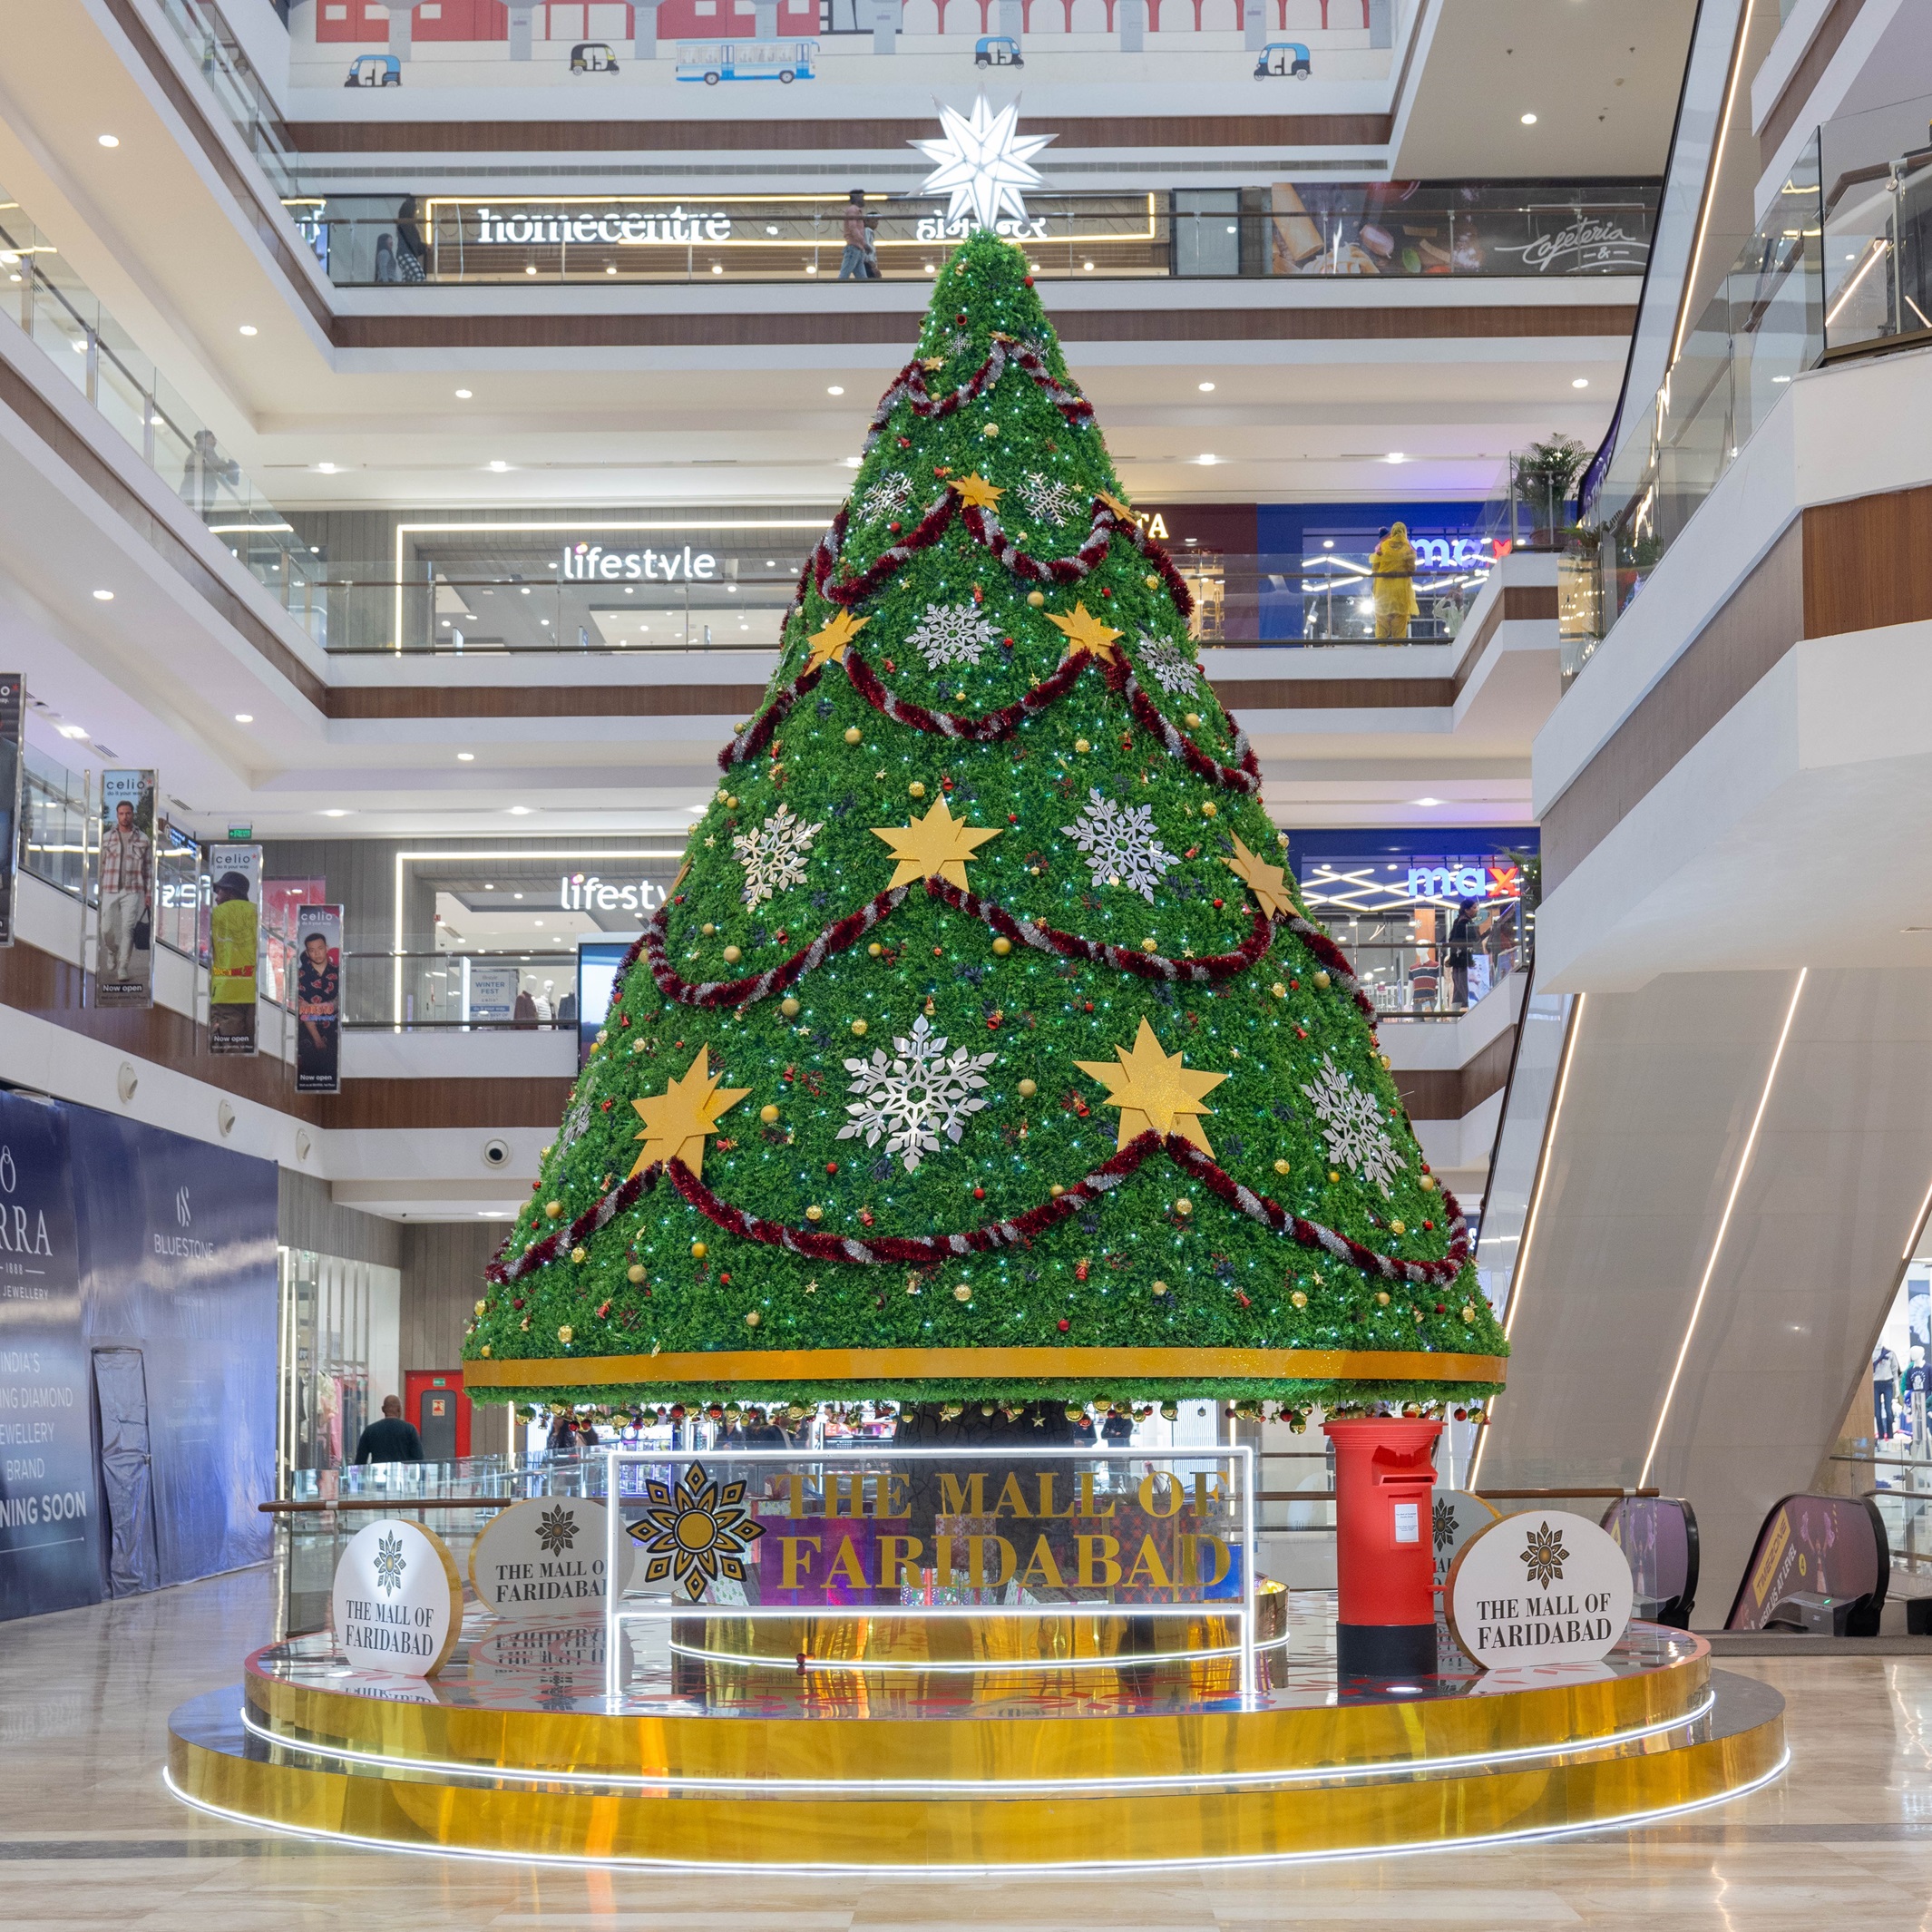 Malls spent top dollars on Christmas decorations